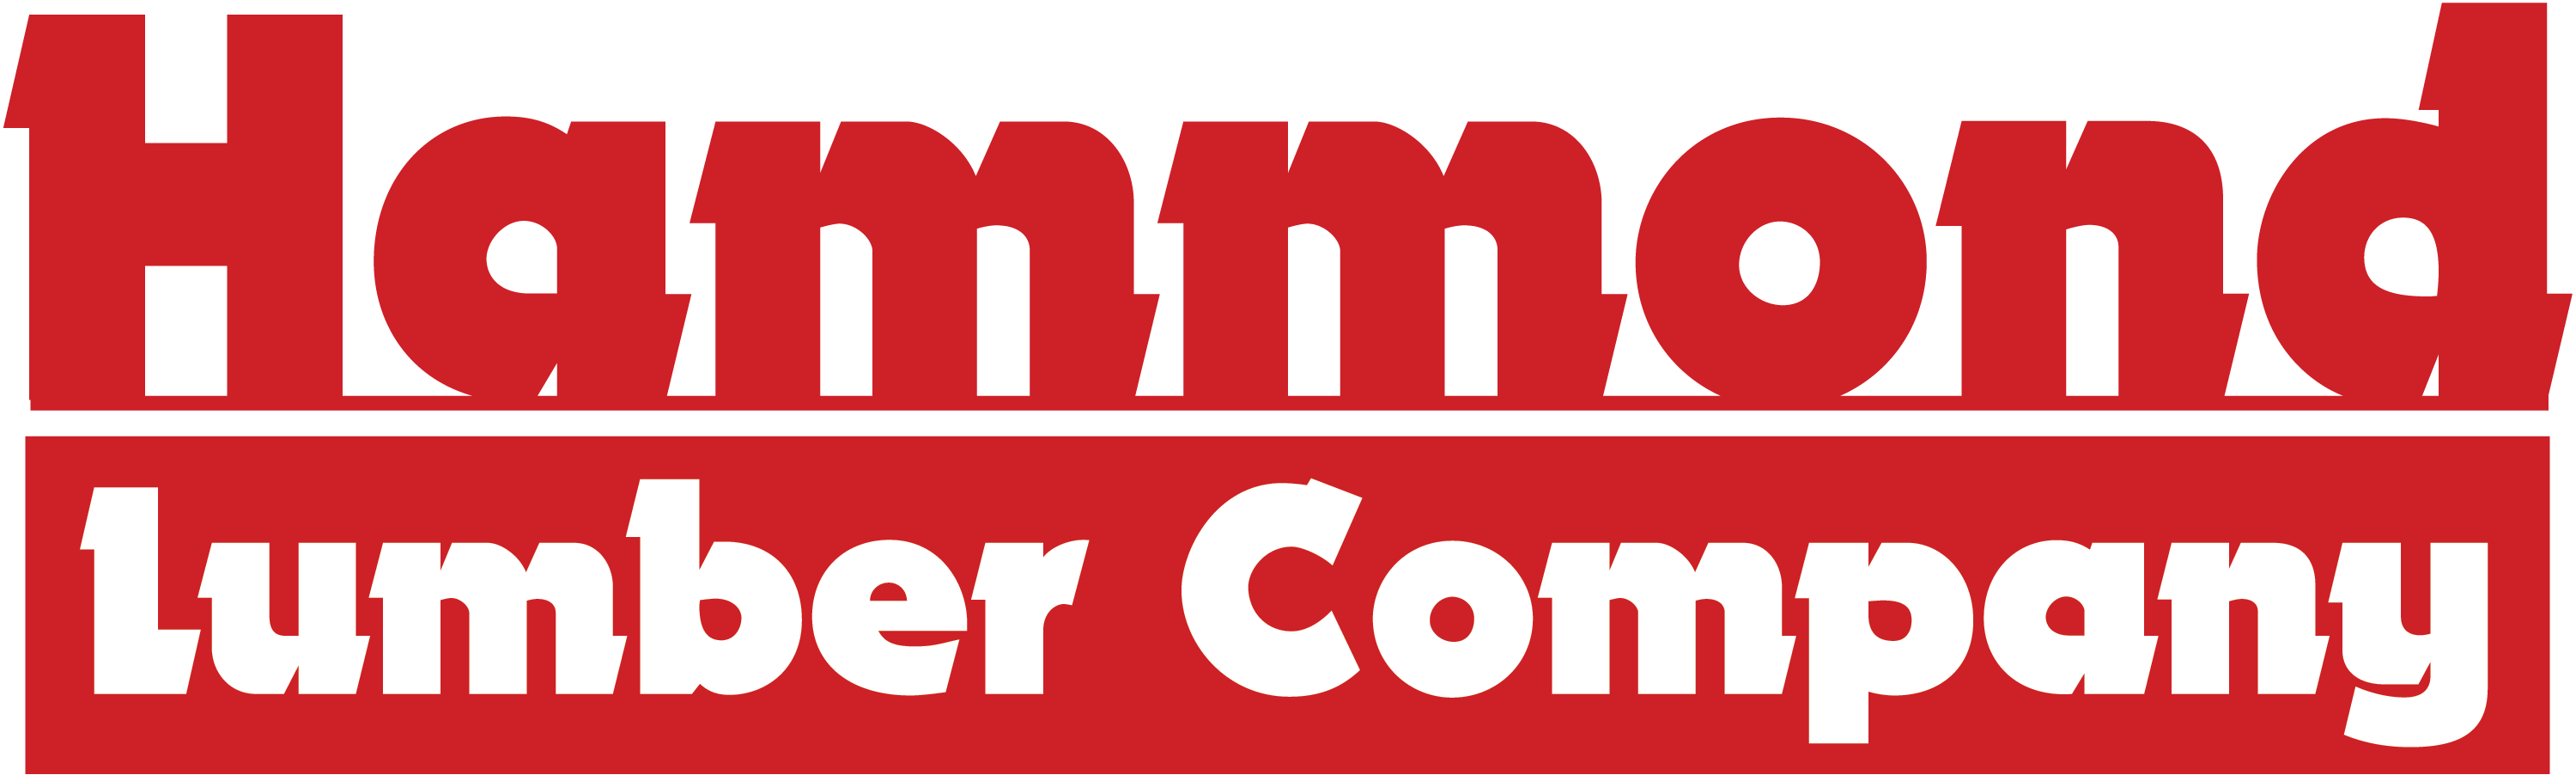 Hammond Logo - Hammond Lumber Company Official Logos - Hammond Lumber Company